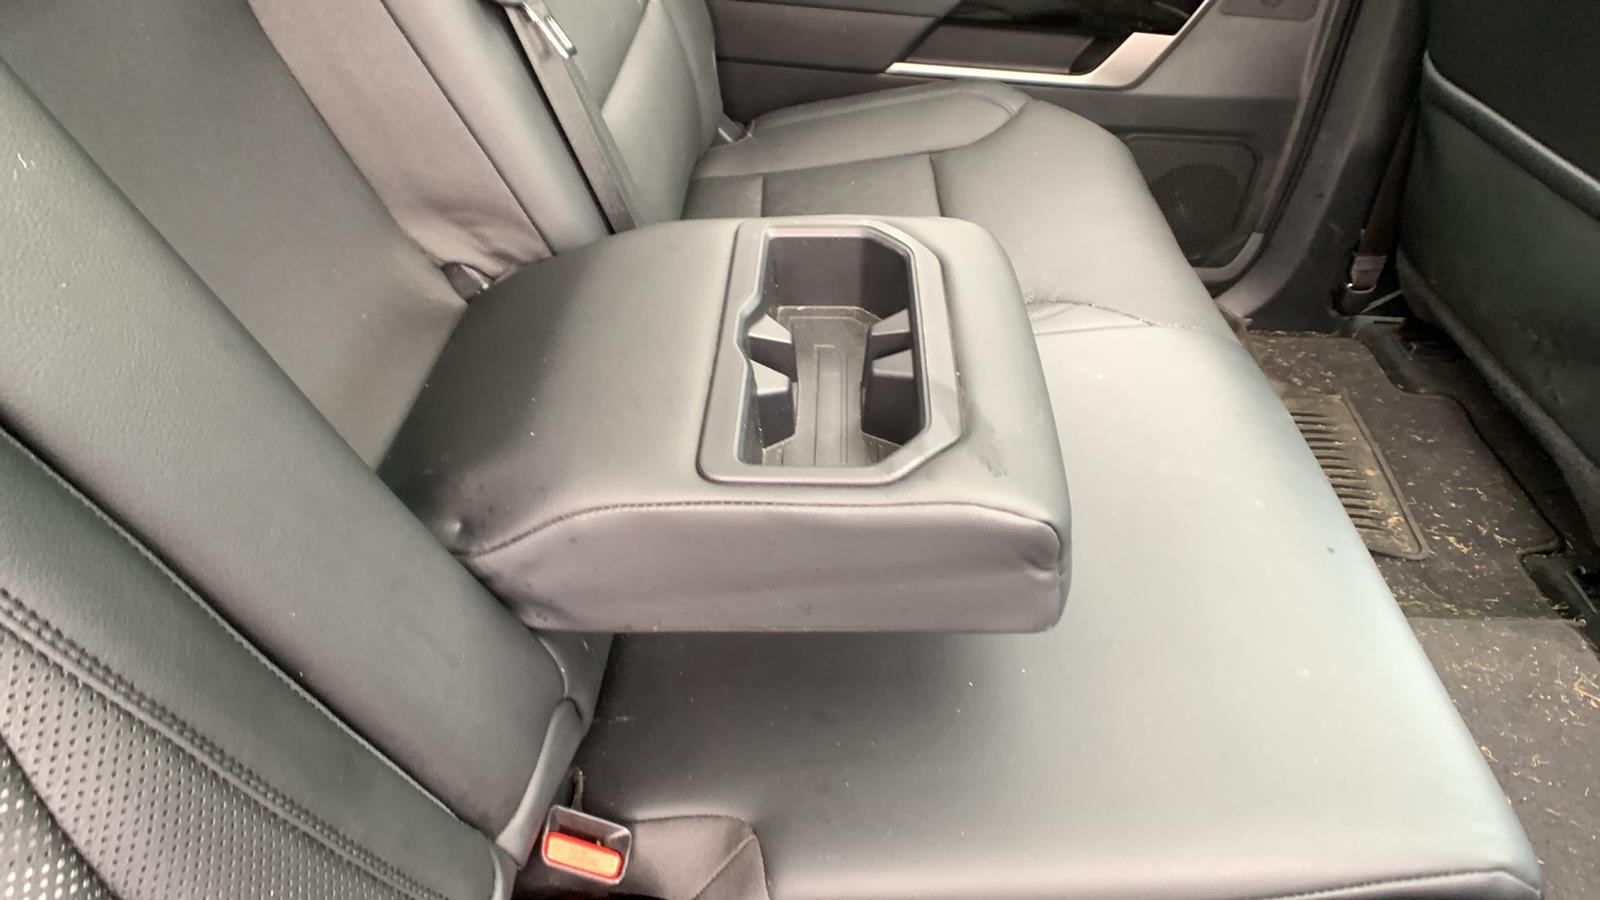 2022 Toyota Tundra Short Bed,Crew Cab Pickup